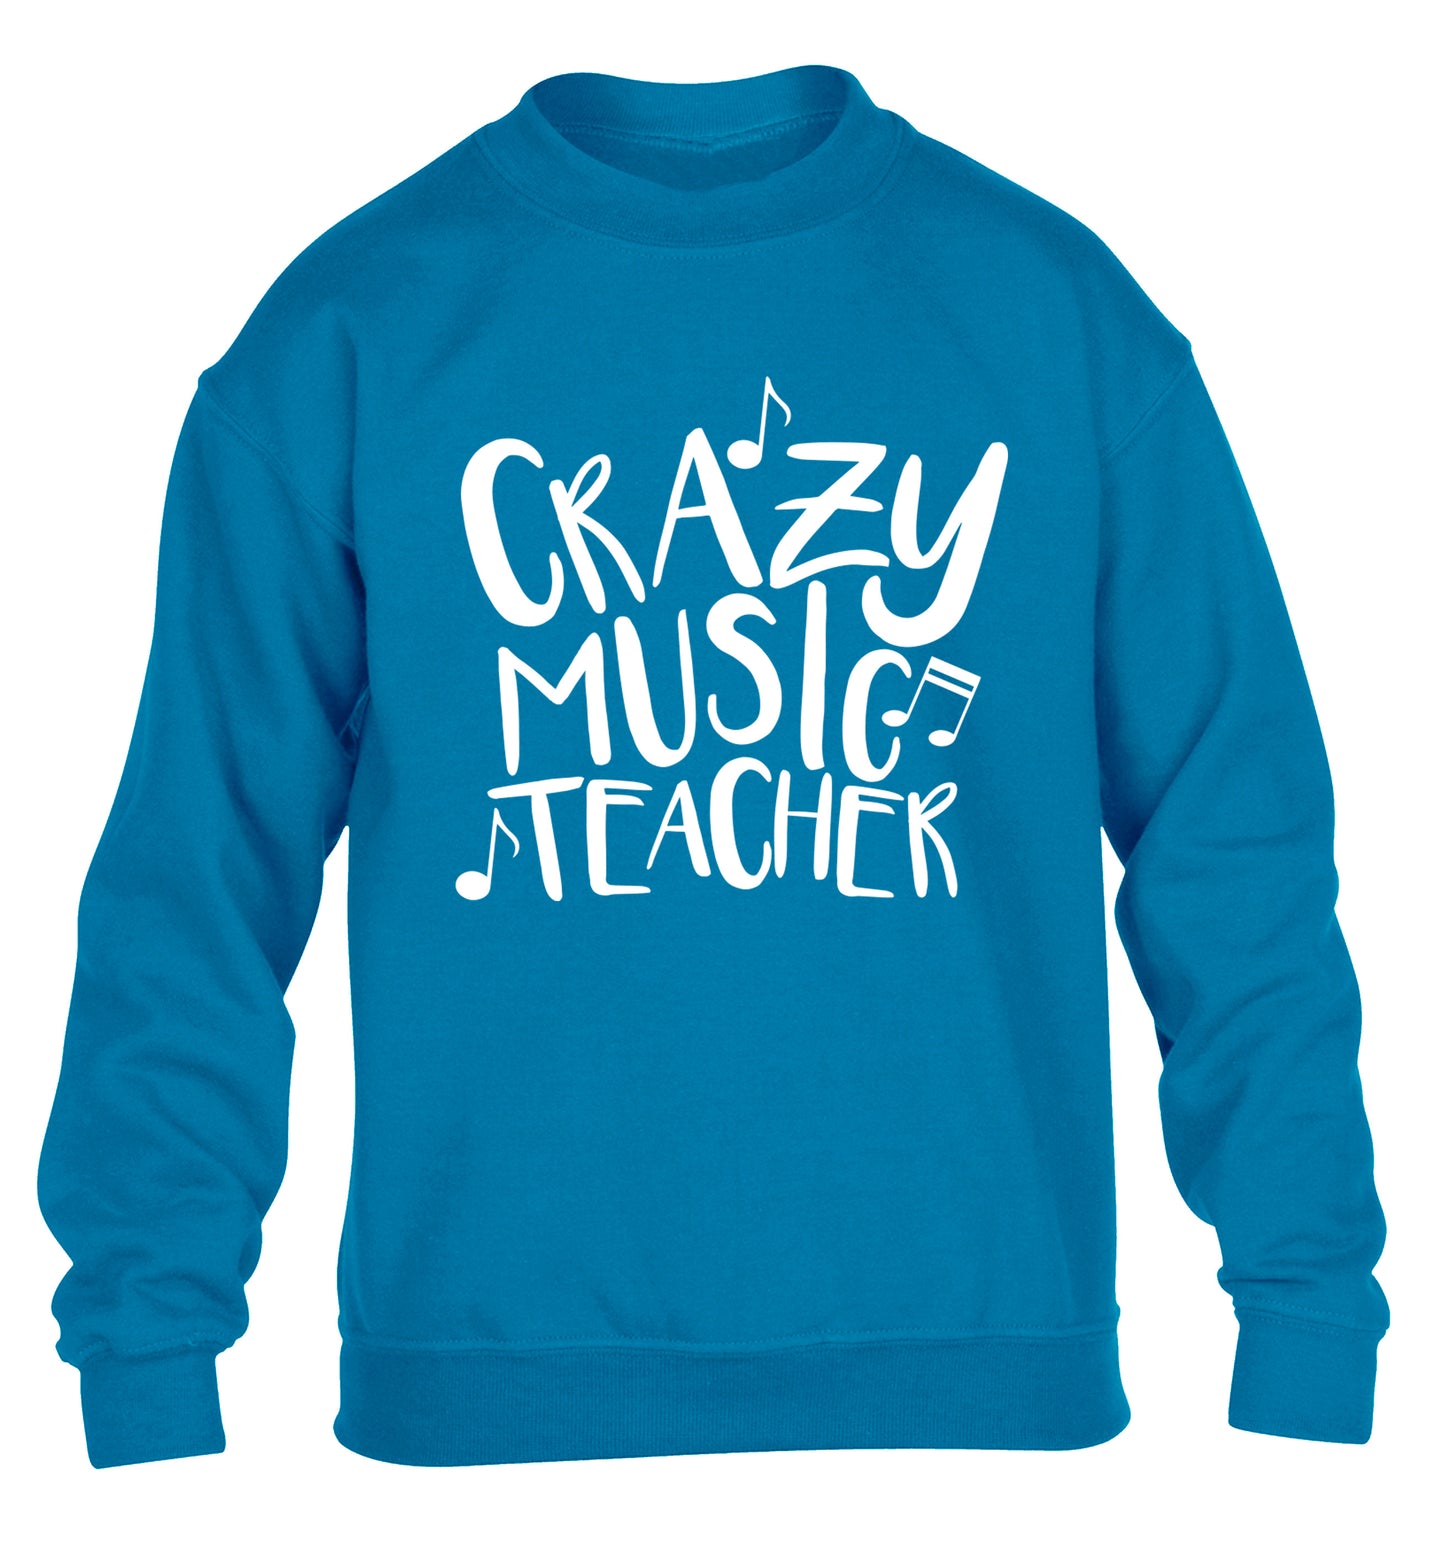 Crazy music teacher children's blue sweater 12-13 Years